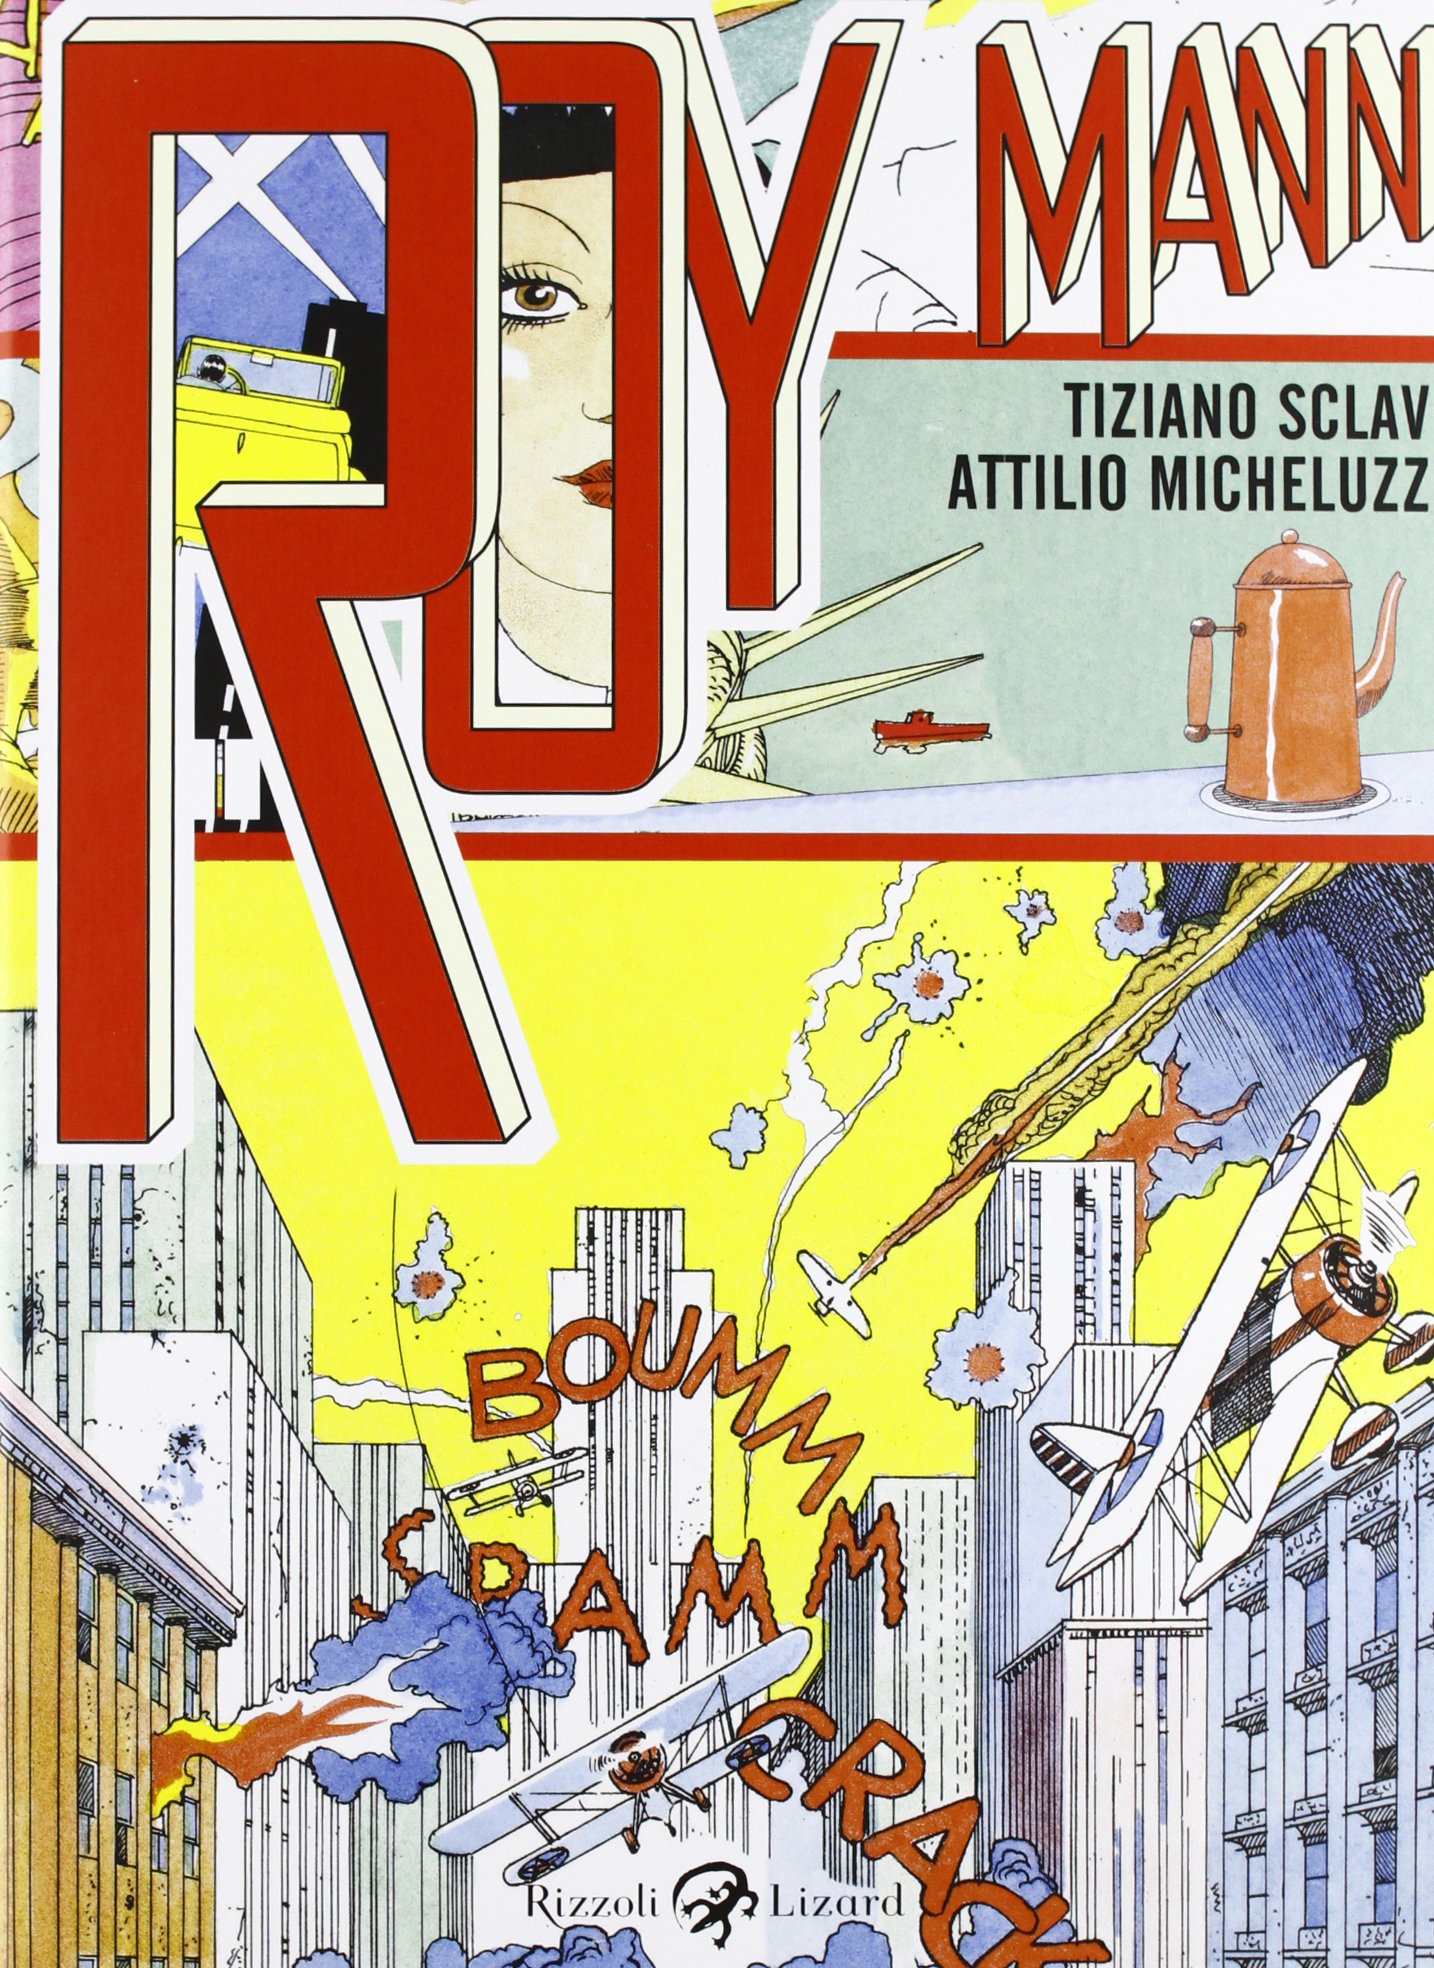 Roy Mann (Italian language, 2013, Rizzoli Lizard)